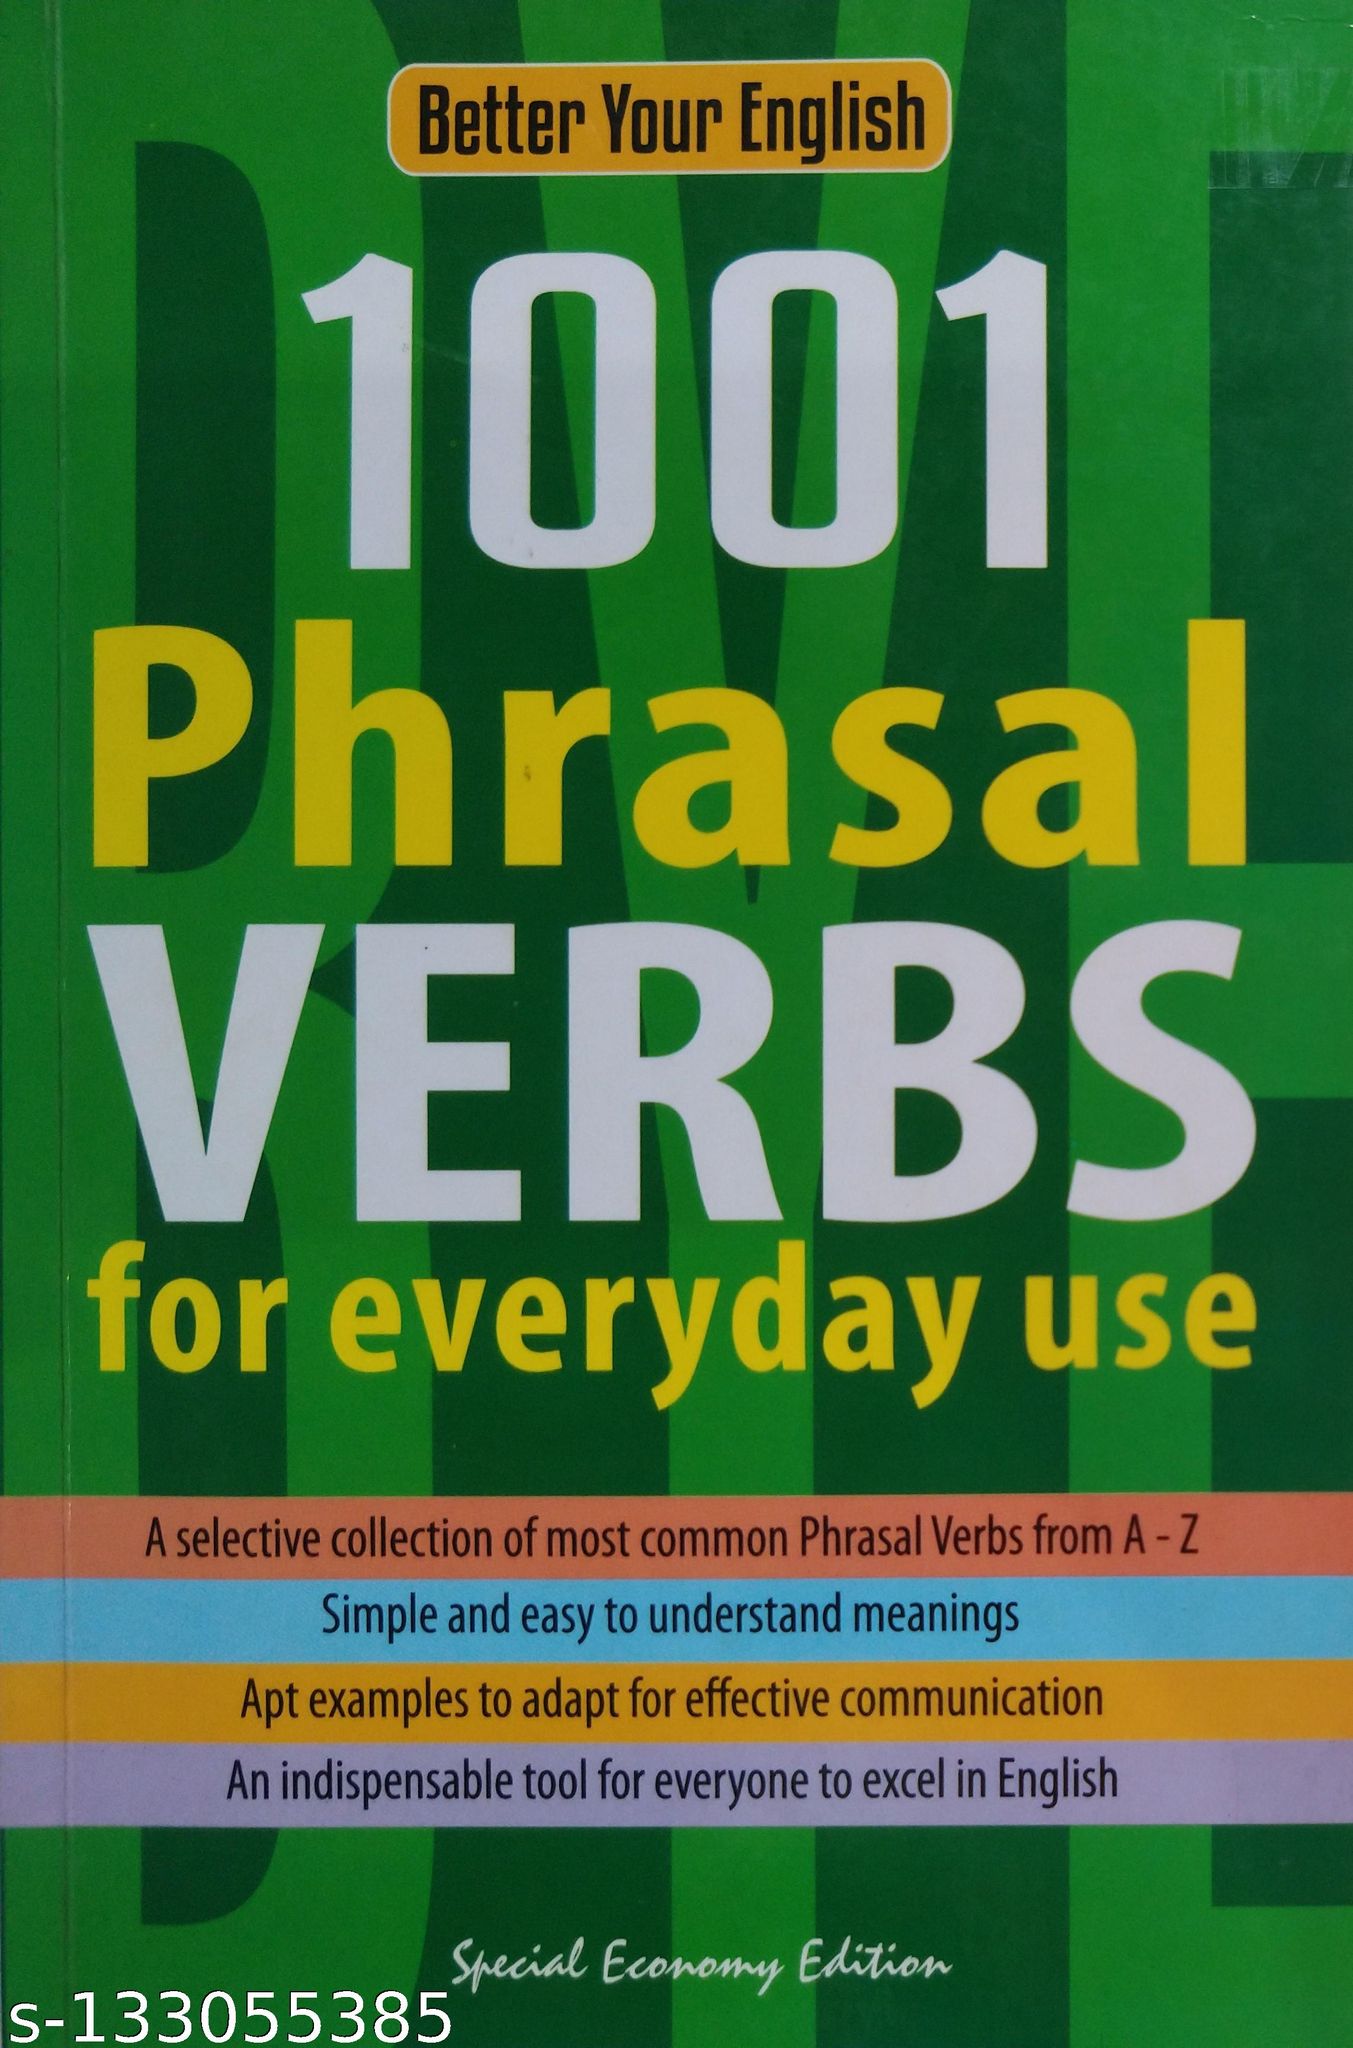 1001 Phrasal Verbs for everyday Use  (Original Copy)